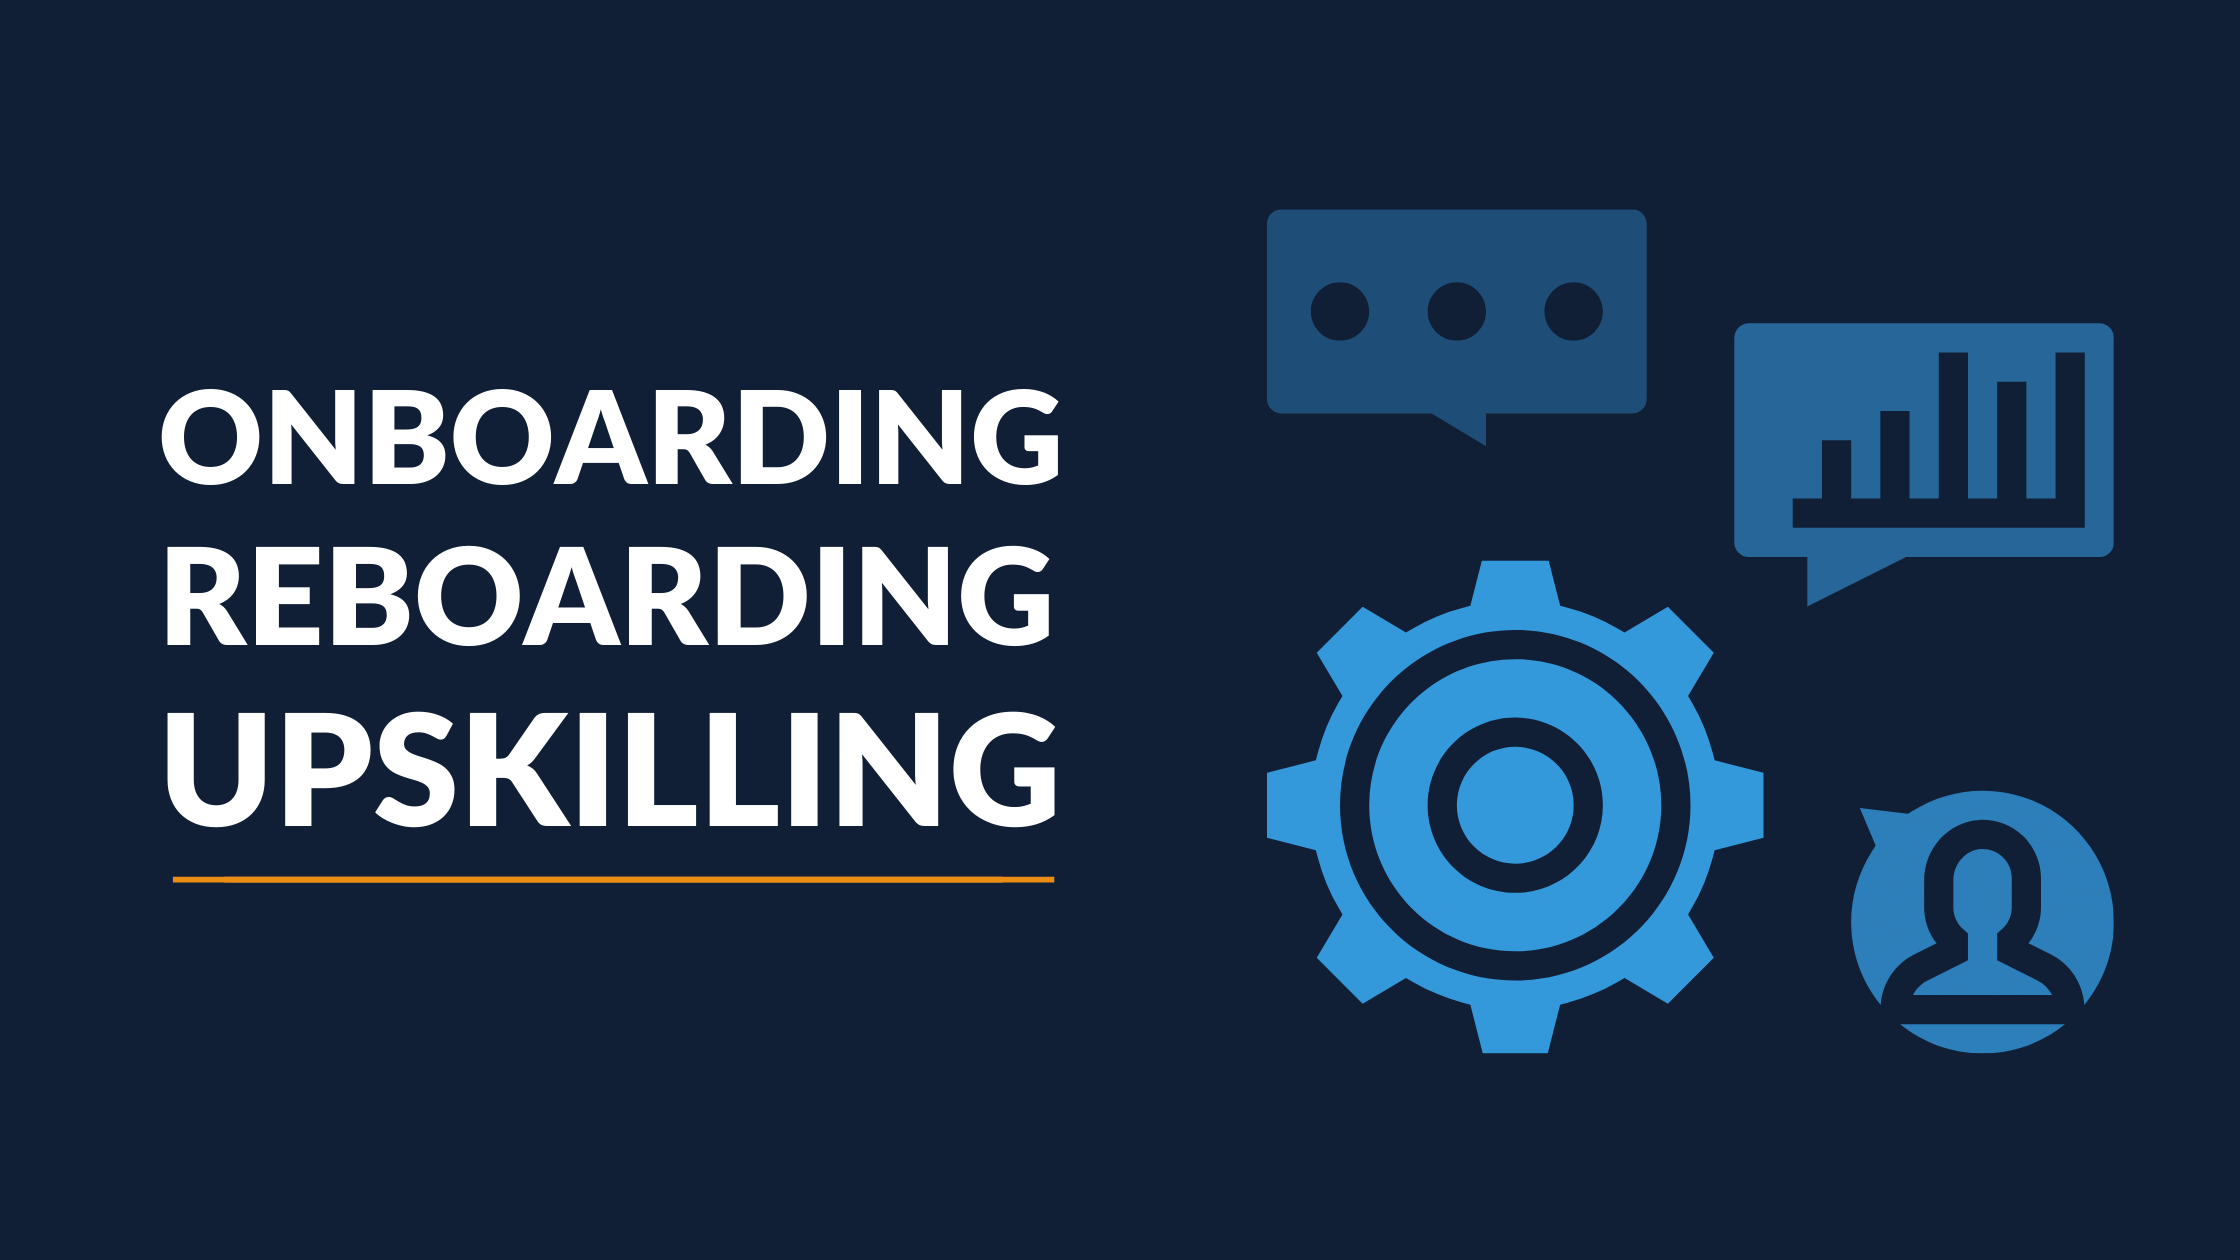 Onboarding vs. Reboarding vs. Upskilling